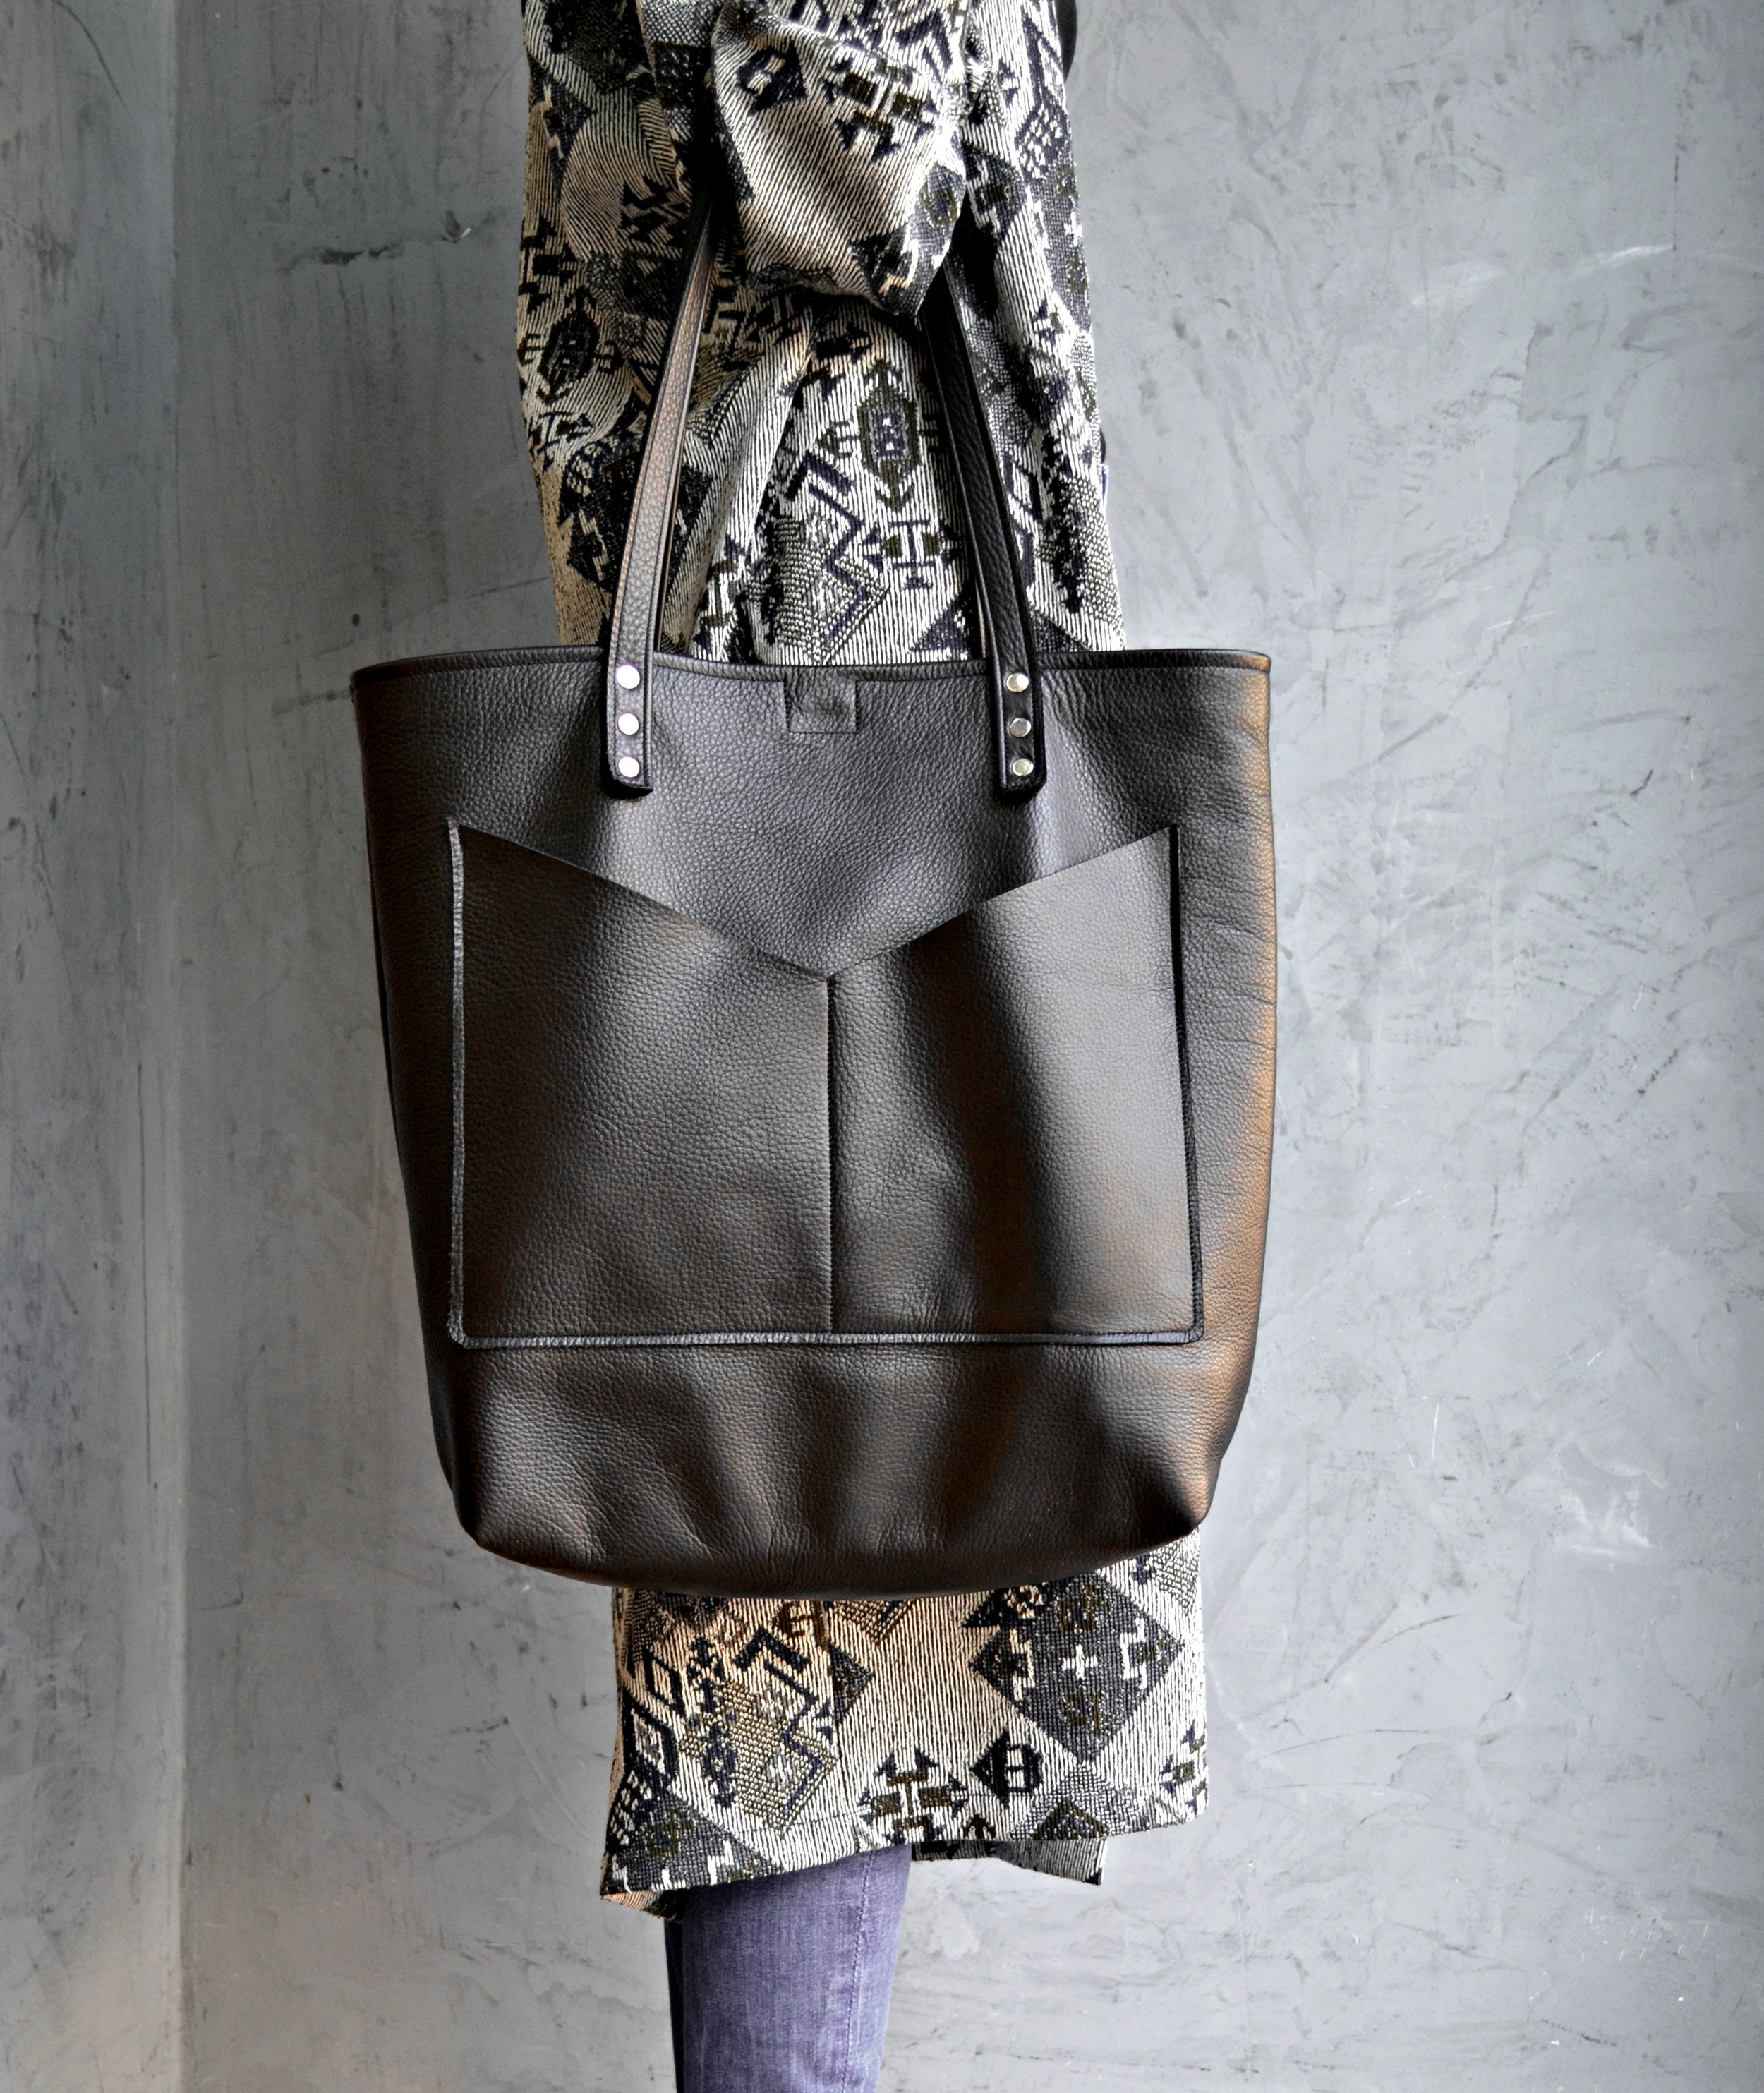 Akathi mat bag in black & white — ANA KOUTSI